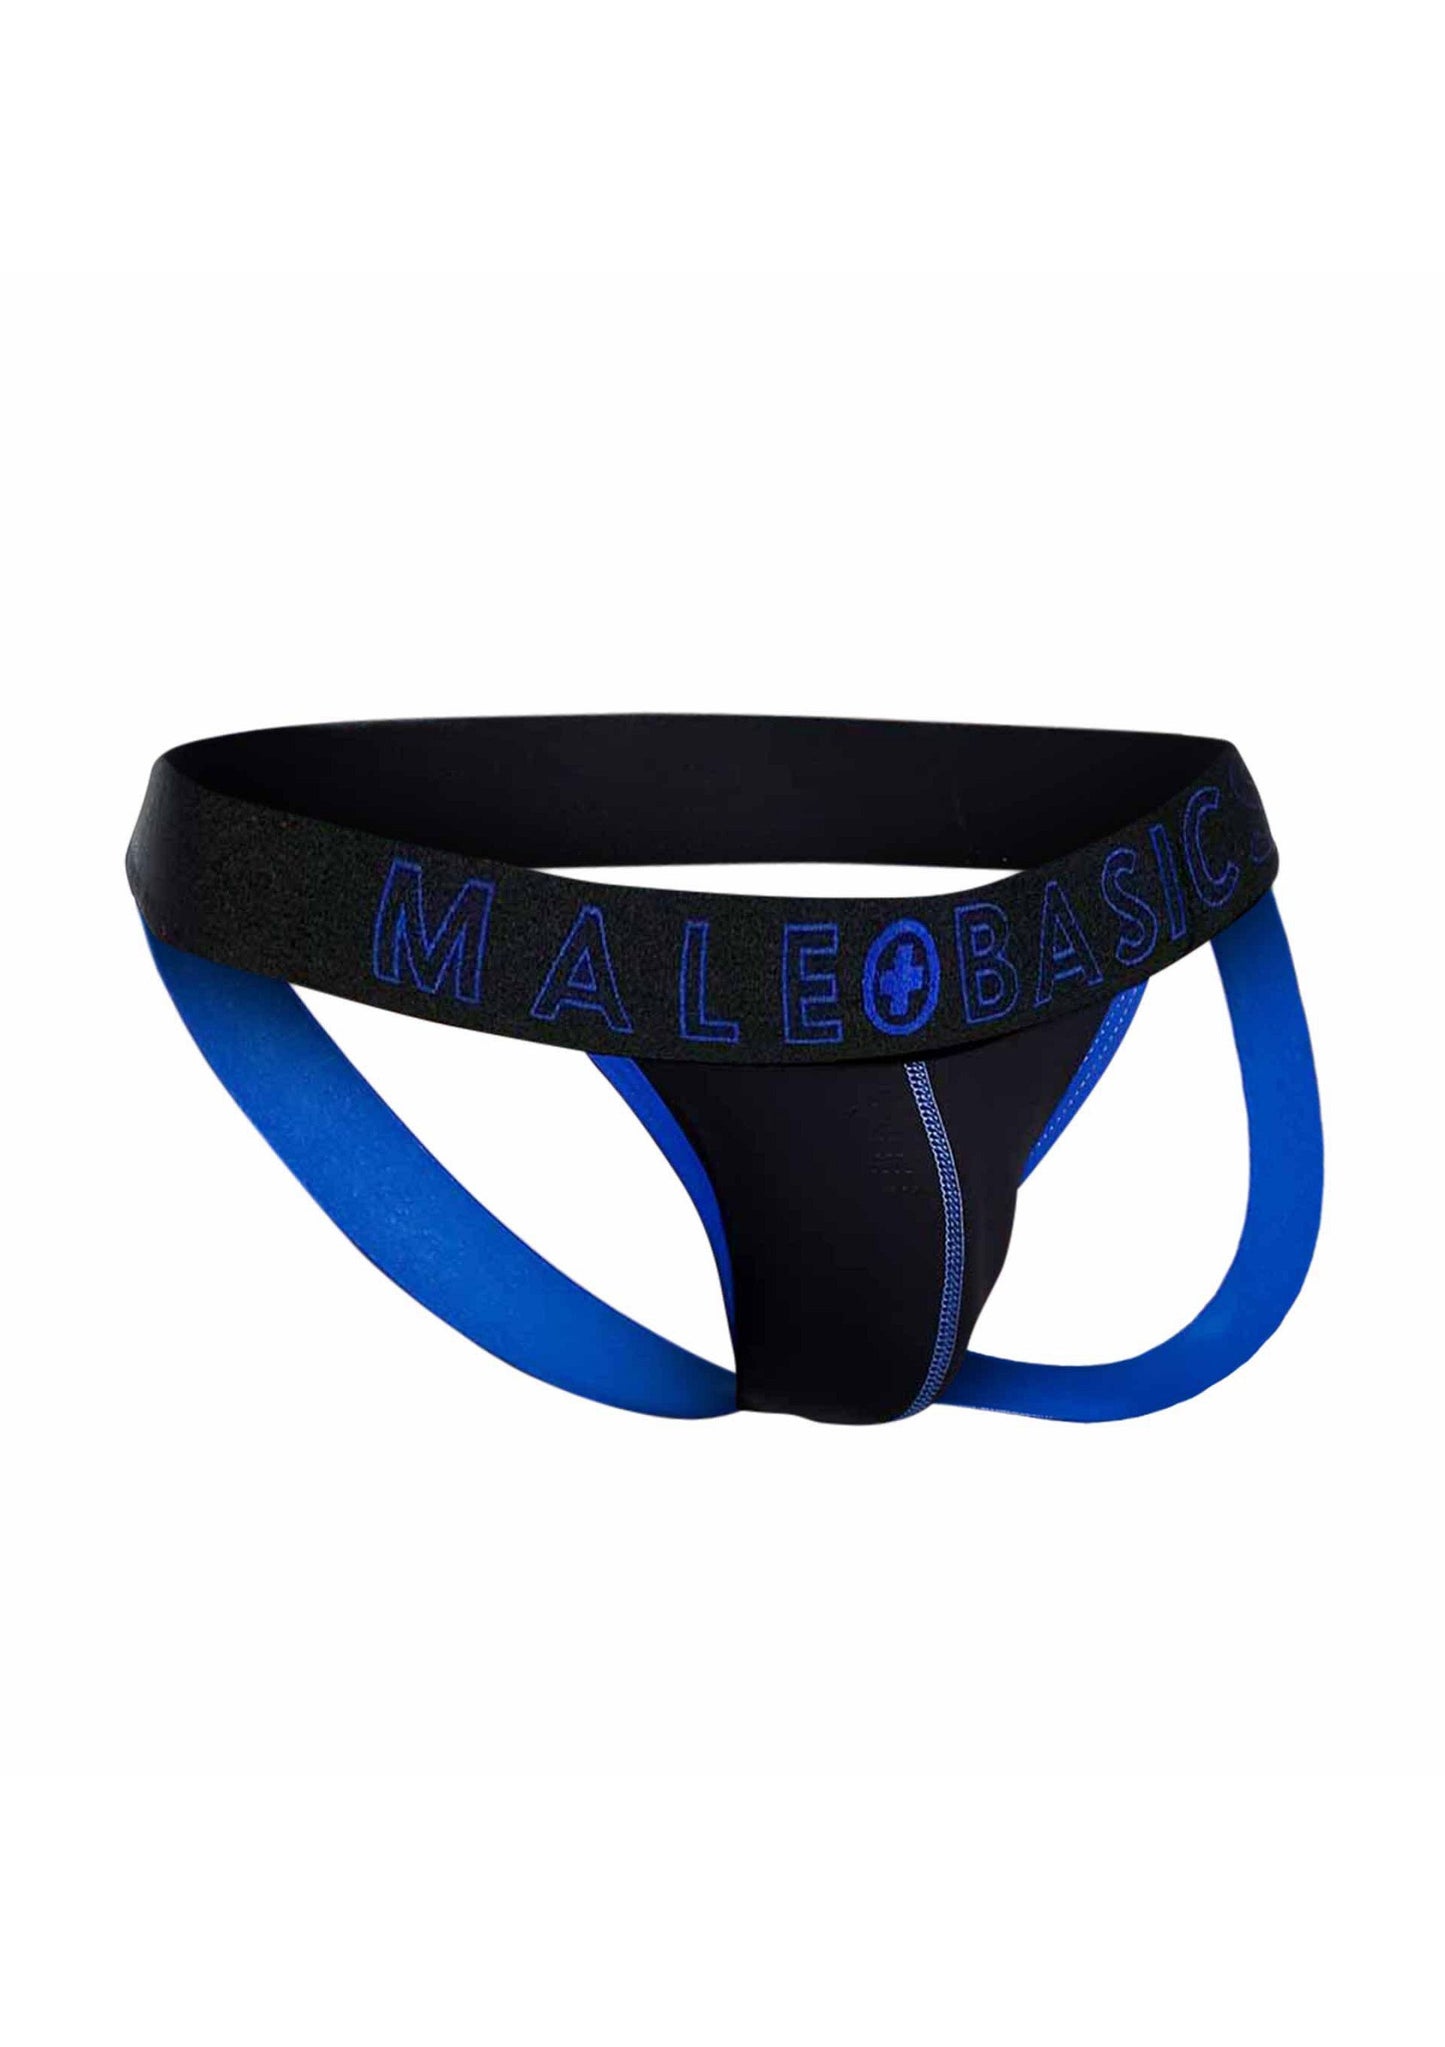 MaleBasics Neon Jock BLUE S - 6